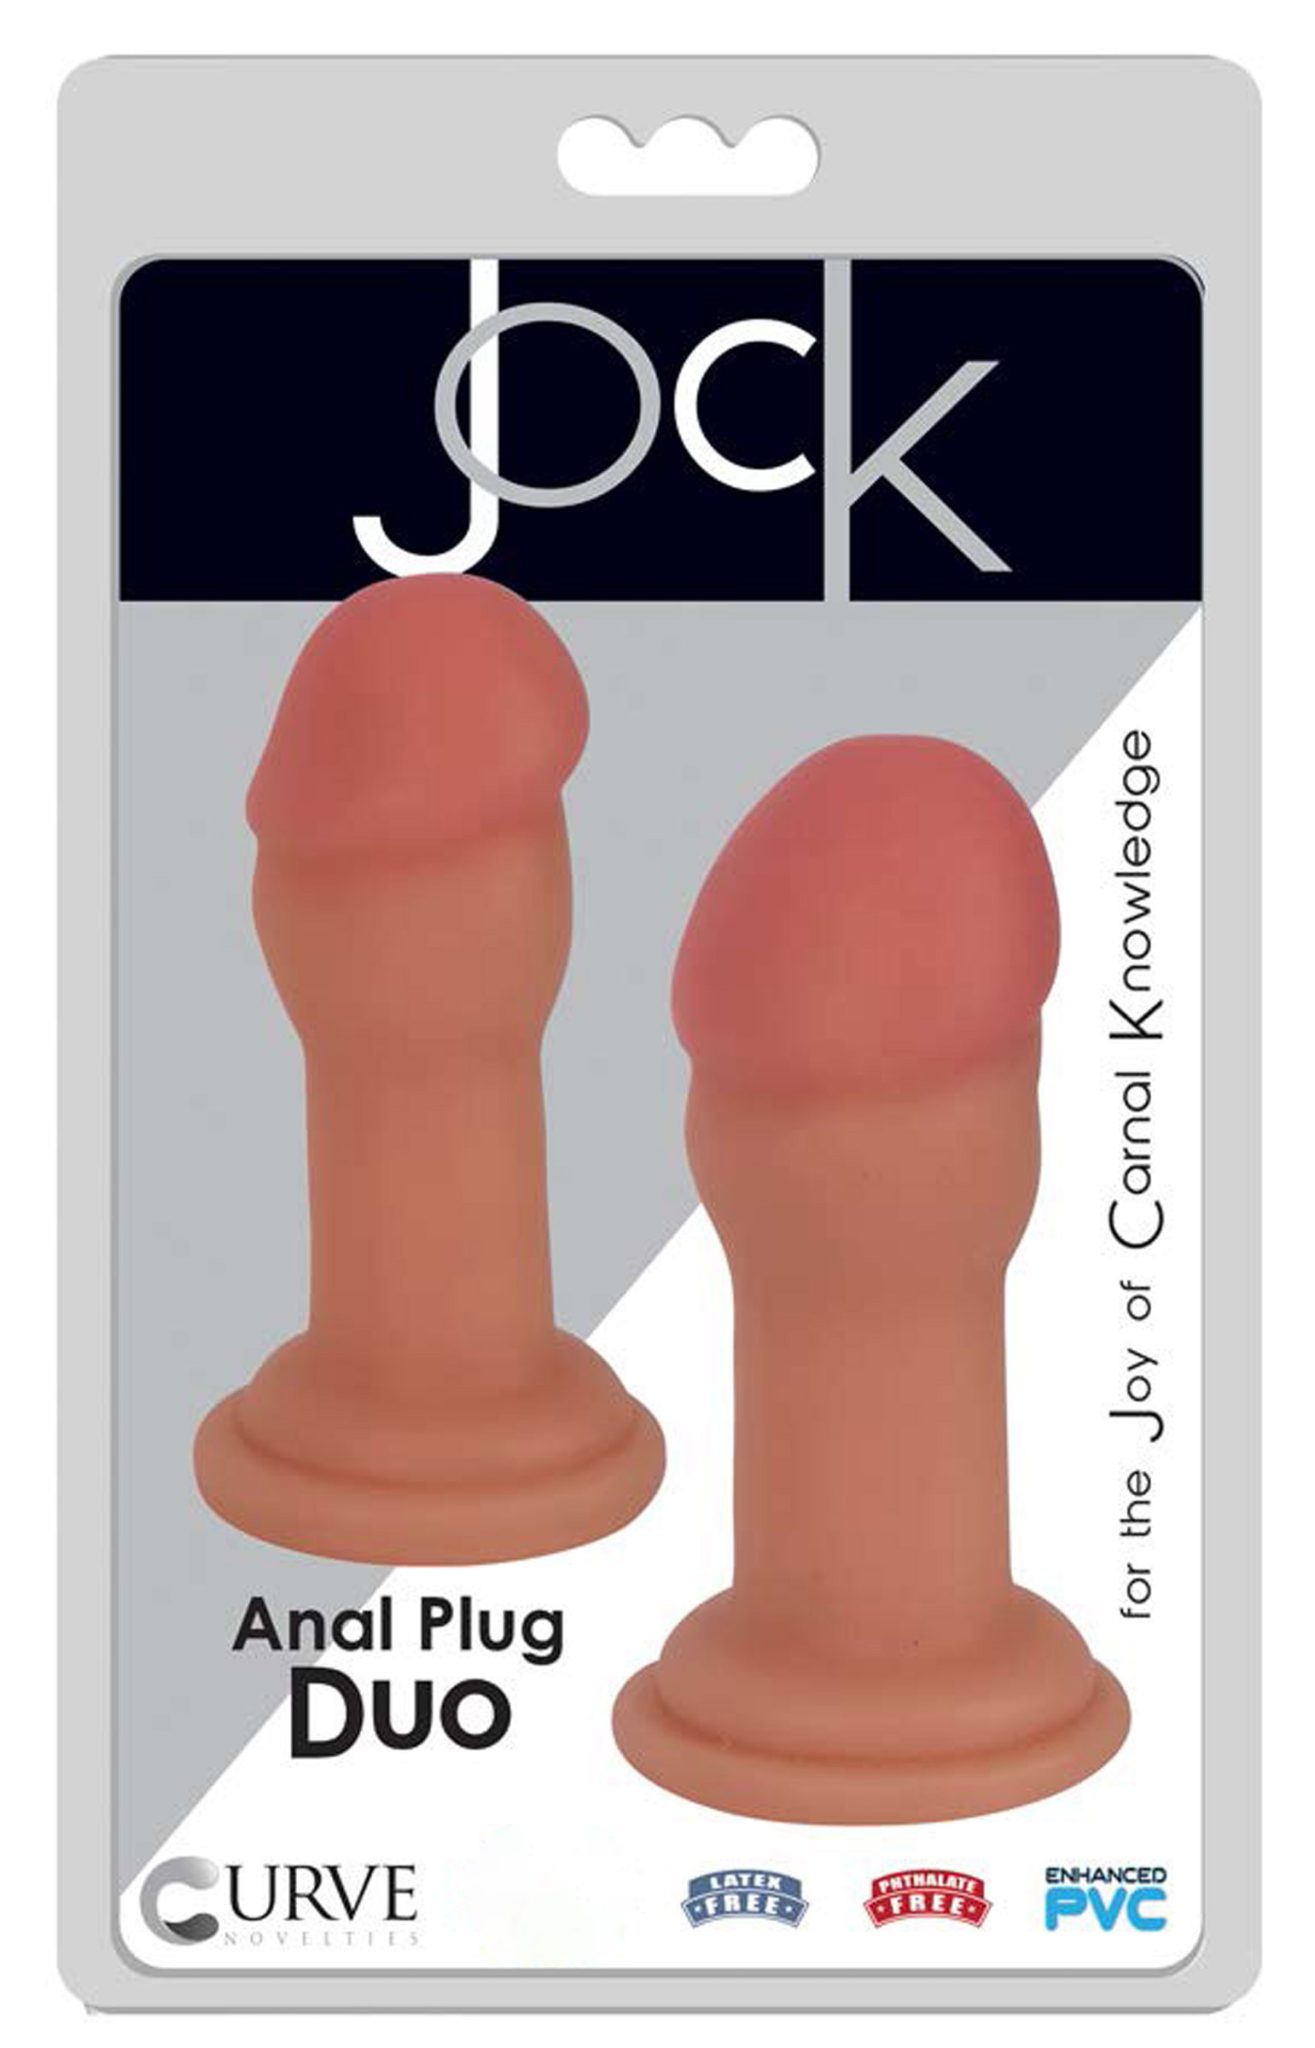 JOCK Anal Plug Duo Flesh